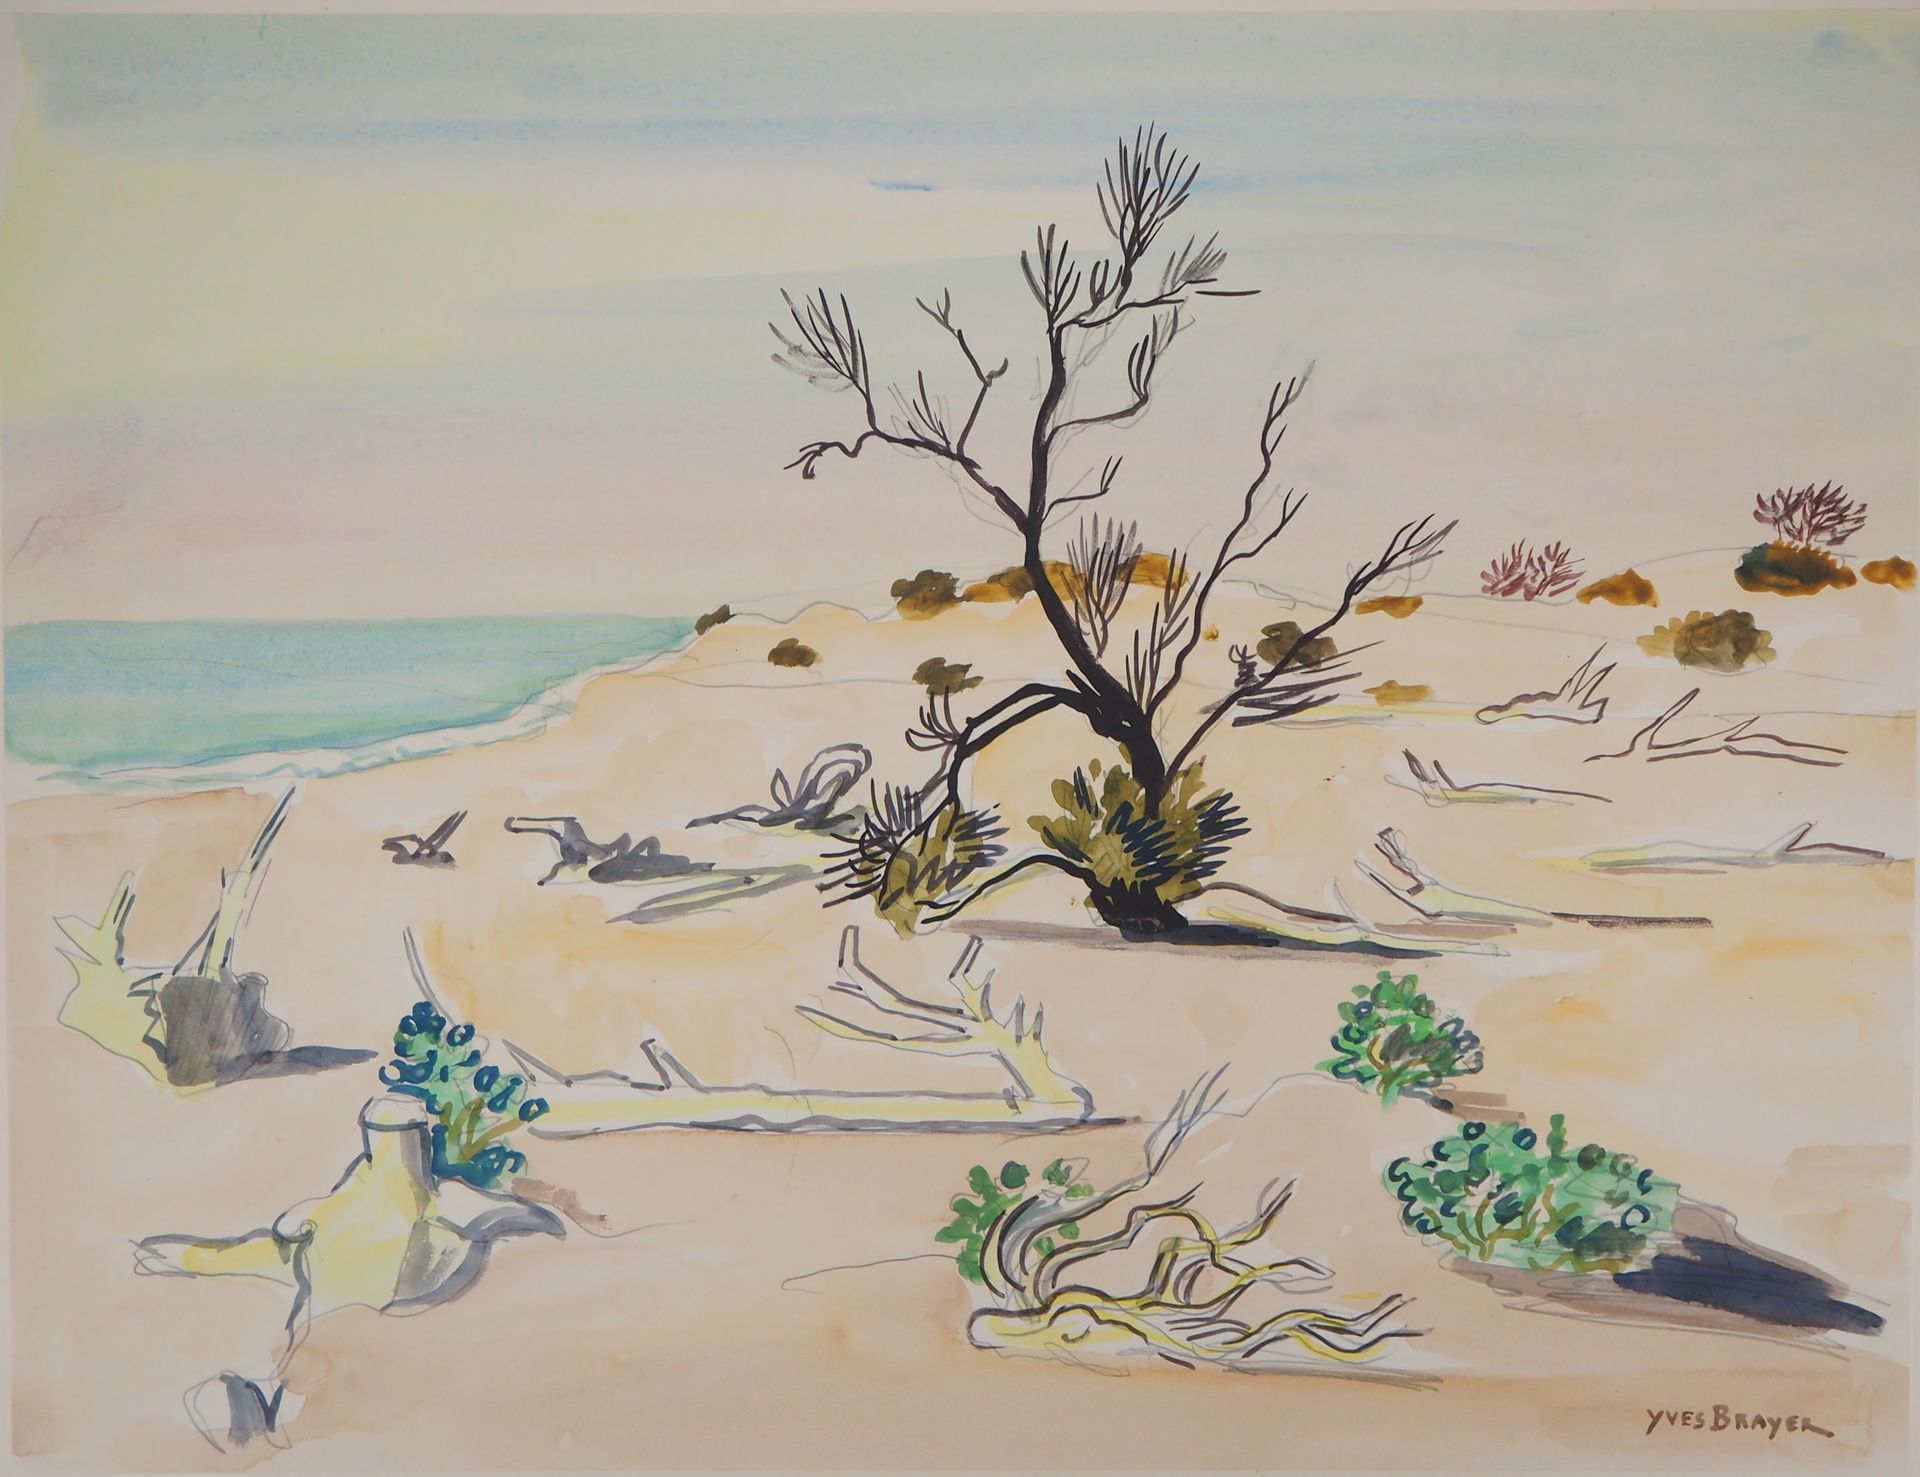 Yves BRAYER Yves BRAYER

卡马格，海边的荒地

原始水彩画

右下方有签名

纸本，内衬细纸板 40 x 53 cm

状况极佳



&hellip;